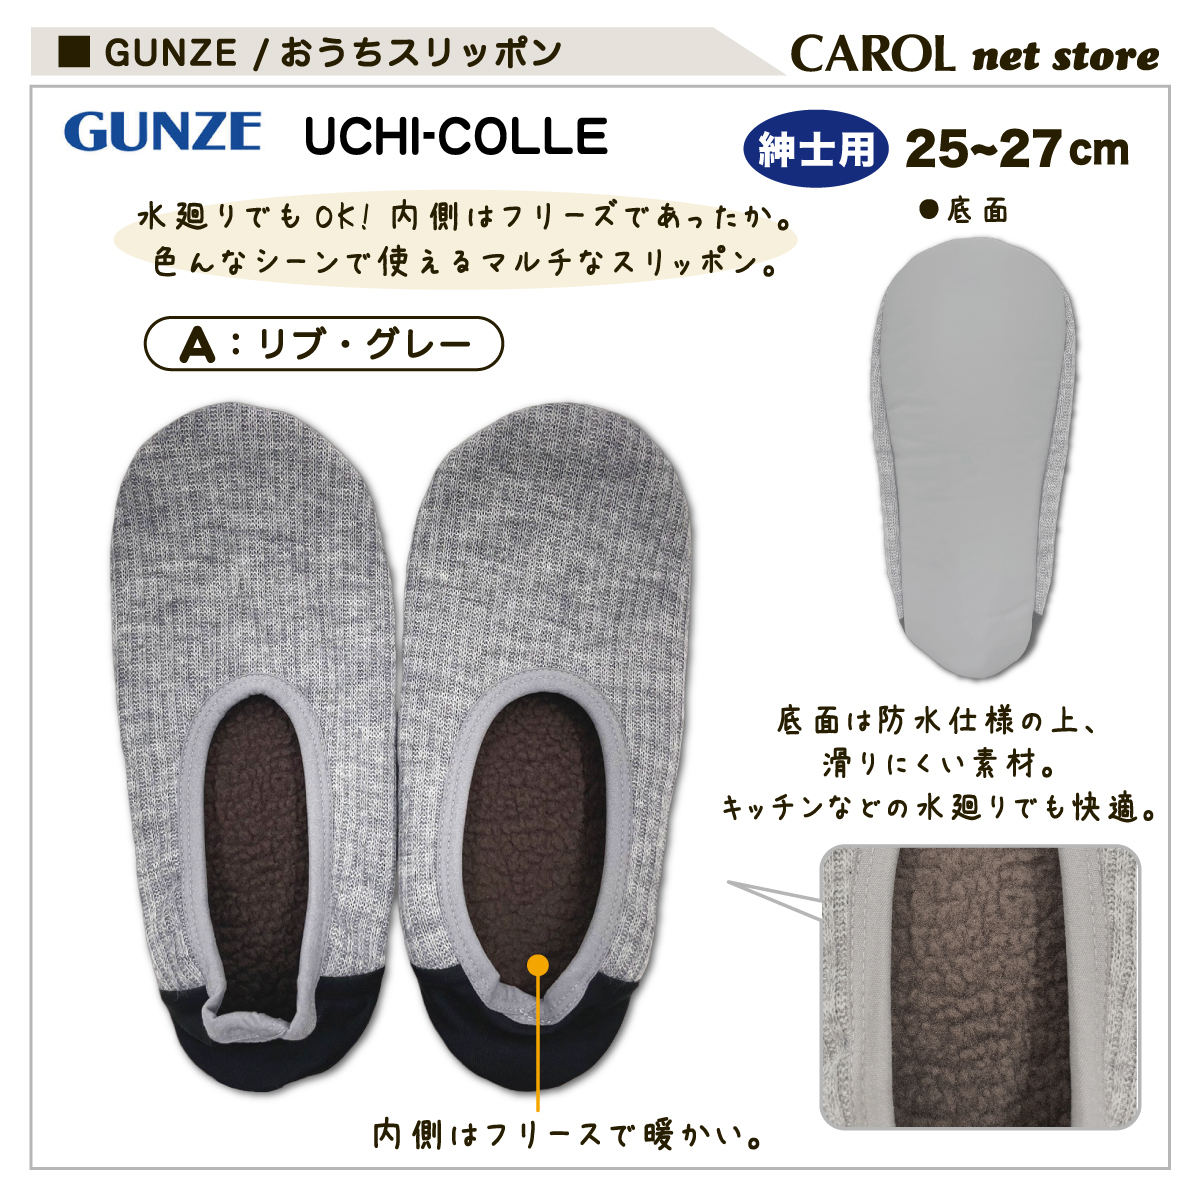  Gunze uchikore... туфли без застежки салон обувь джентльмен для 25-27cm теплый защищающий от холода GUNZE UCHICOLLE стирка OK почтовая доставка 